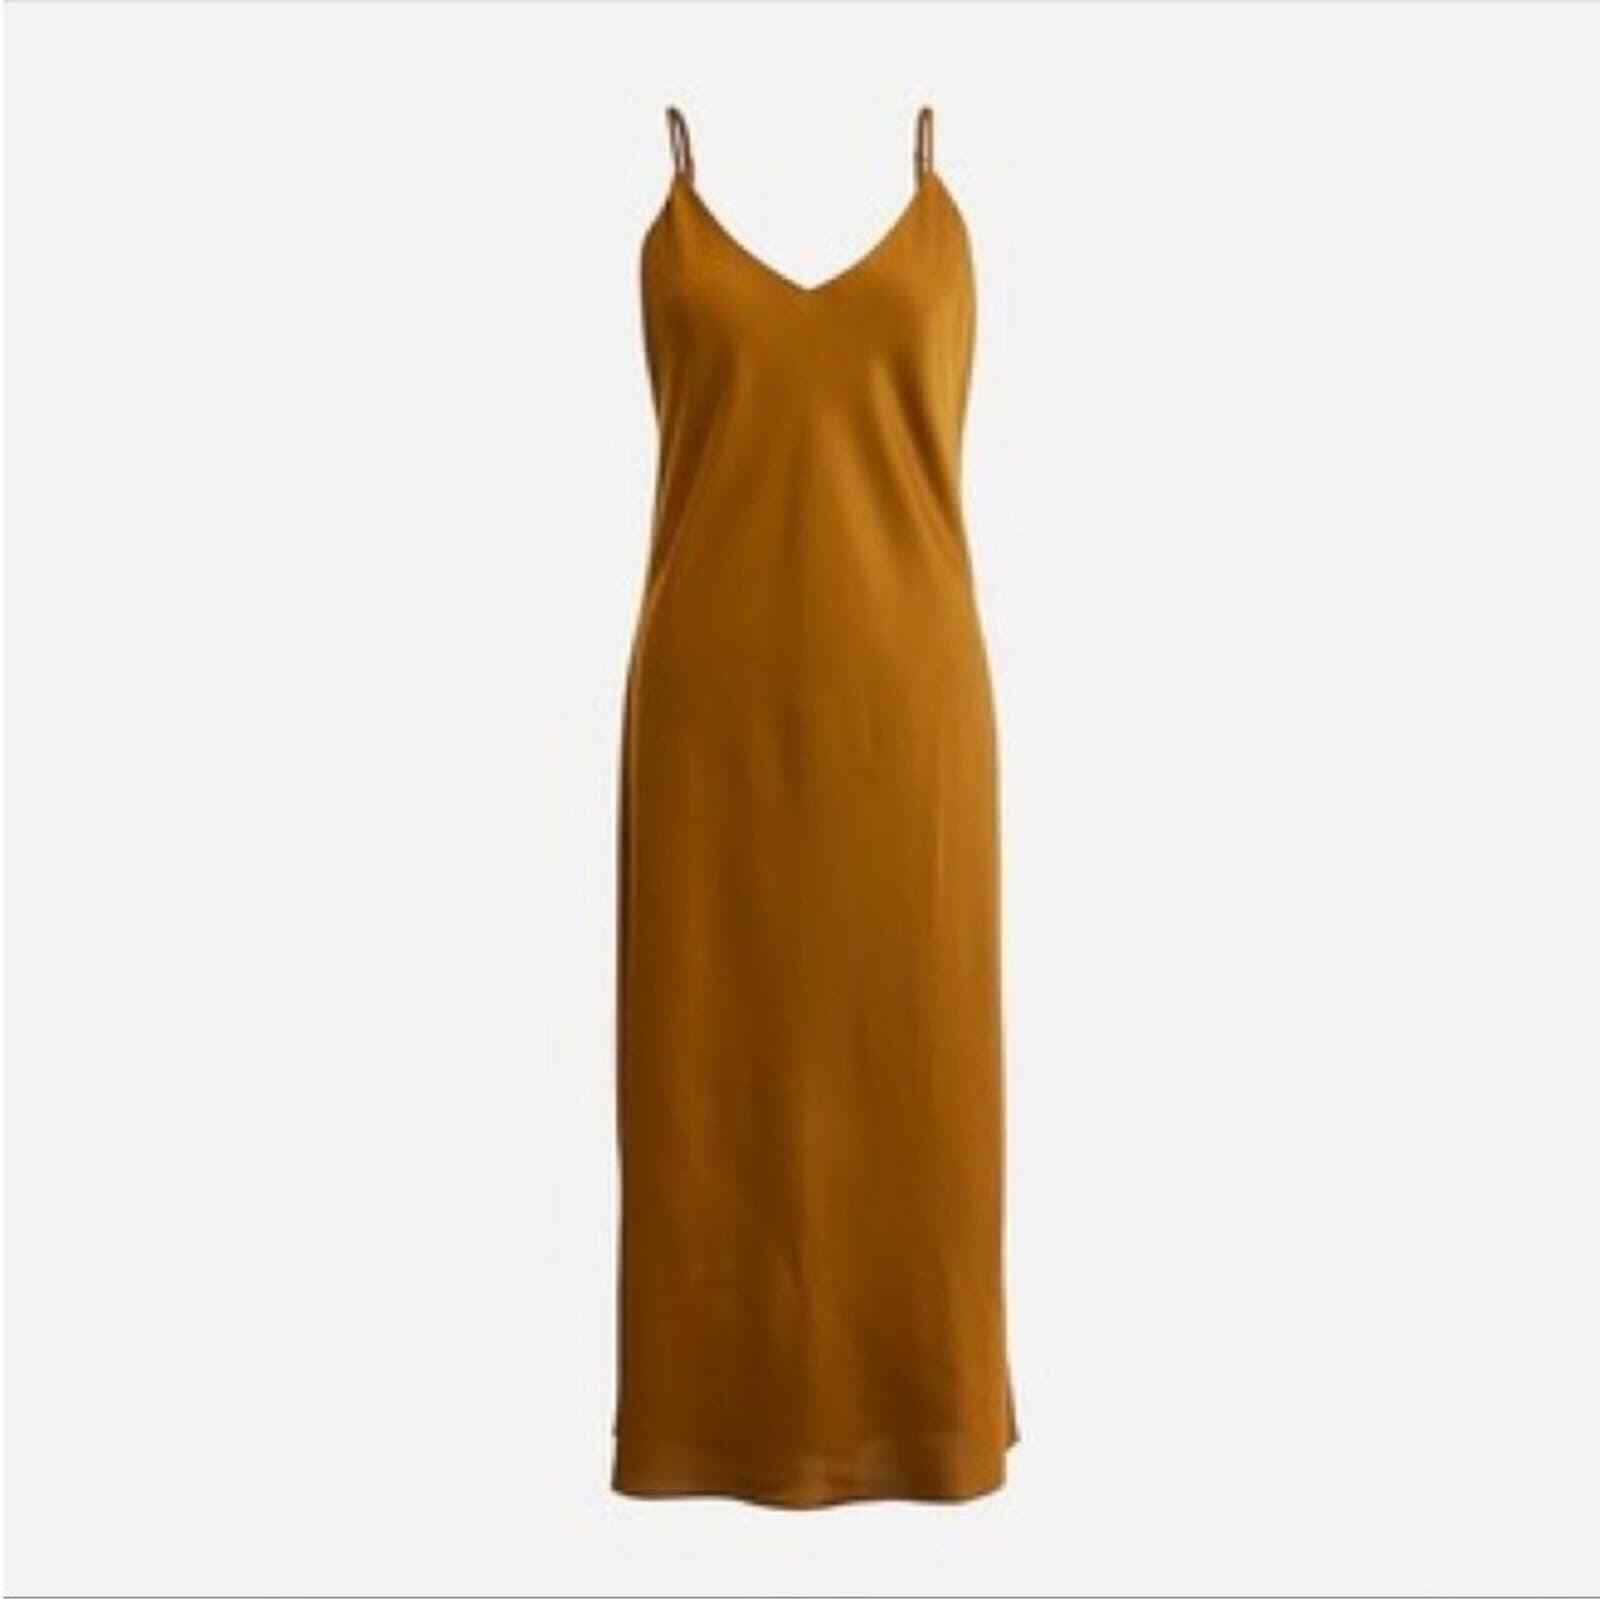 J. Crew Bias-Cut Slip Dress Gold/Bronze Size 0 - image 1